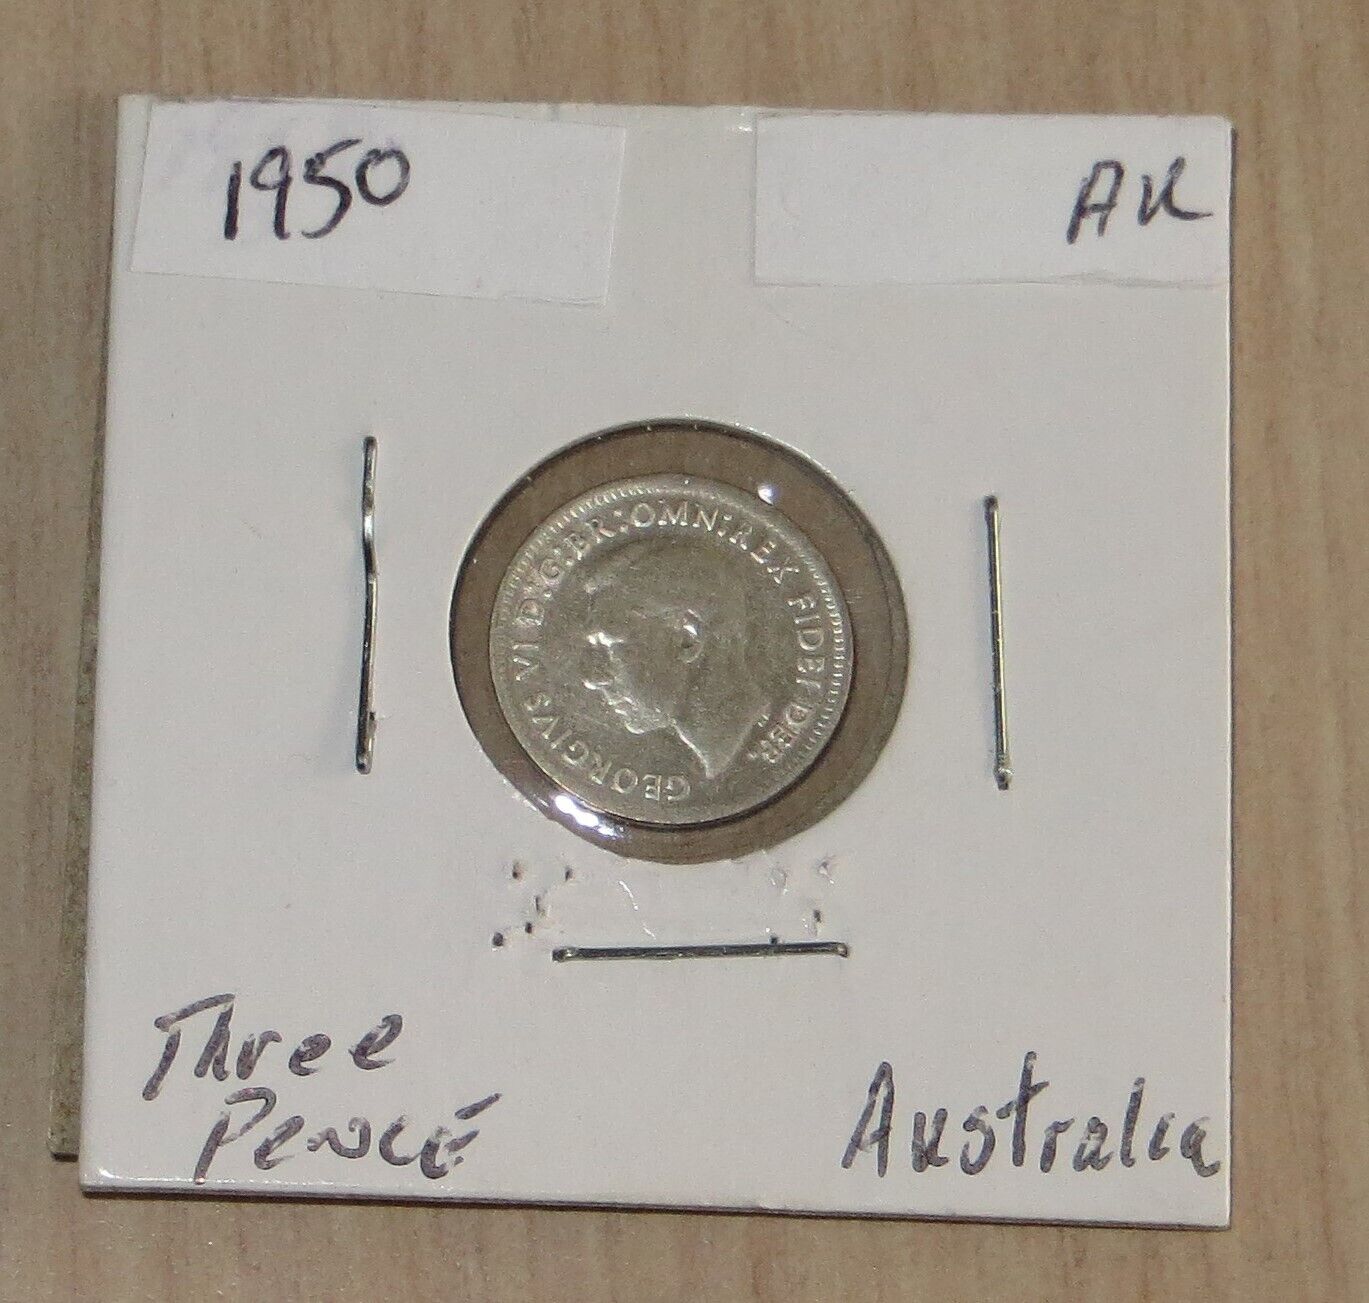 Australia 1950 Three Pence Coin 1p17 silver Coin